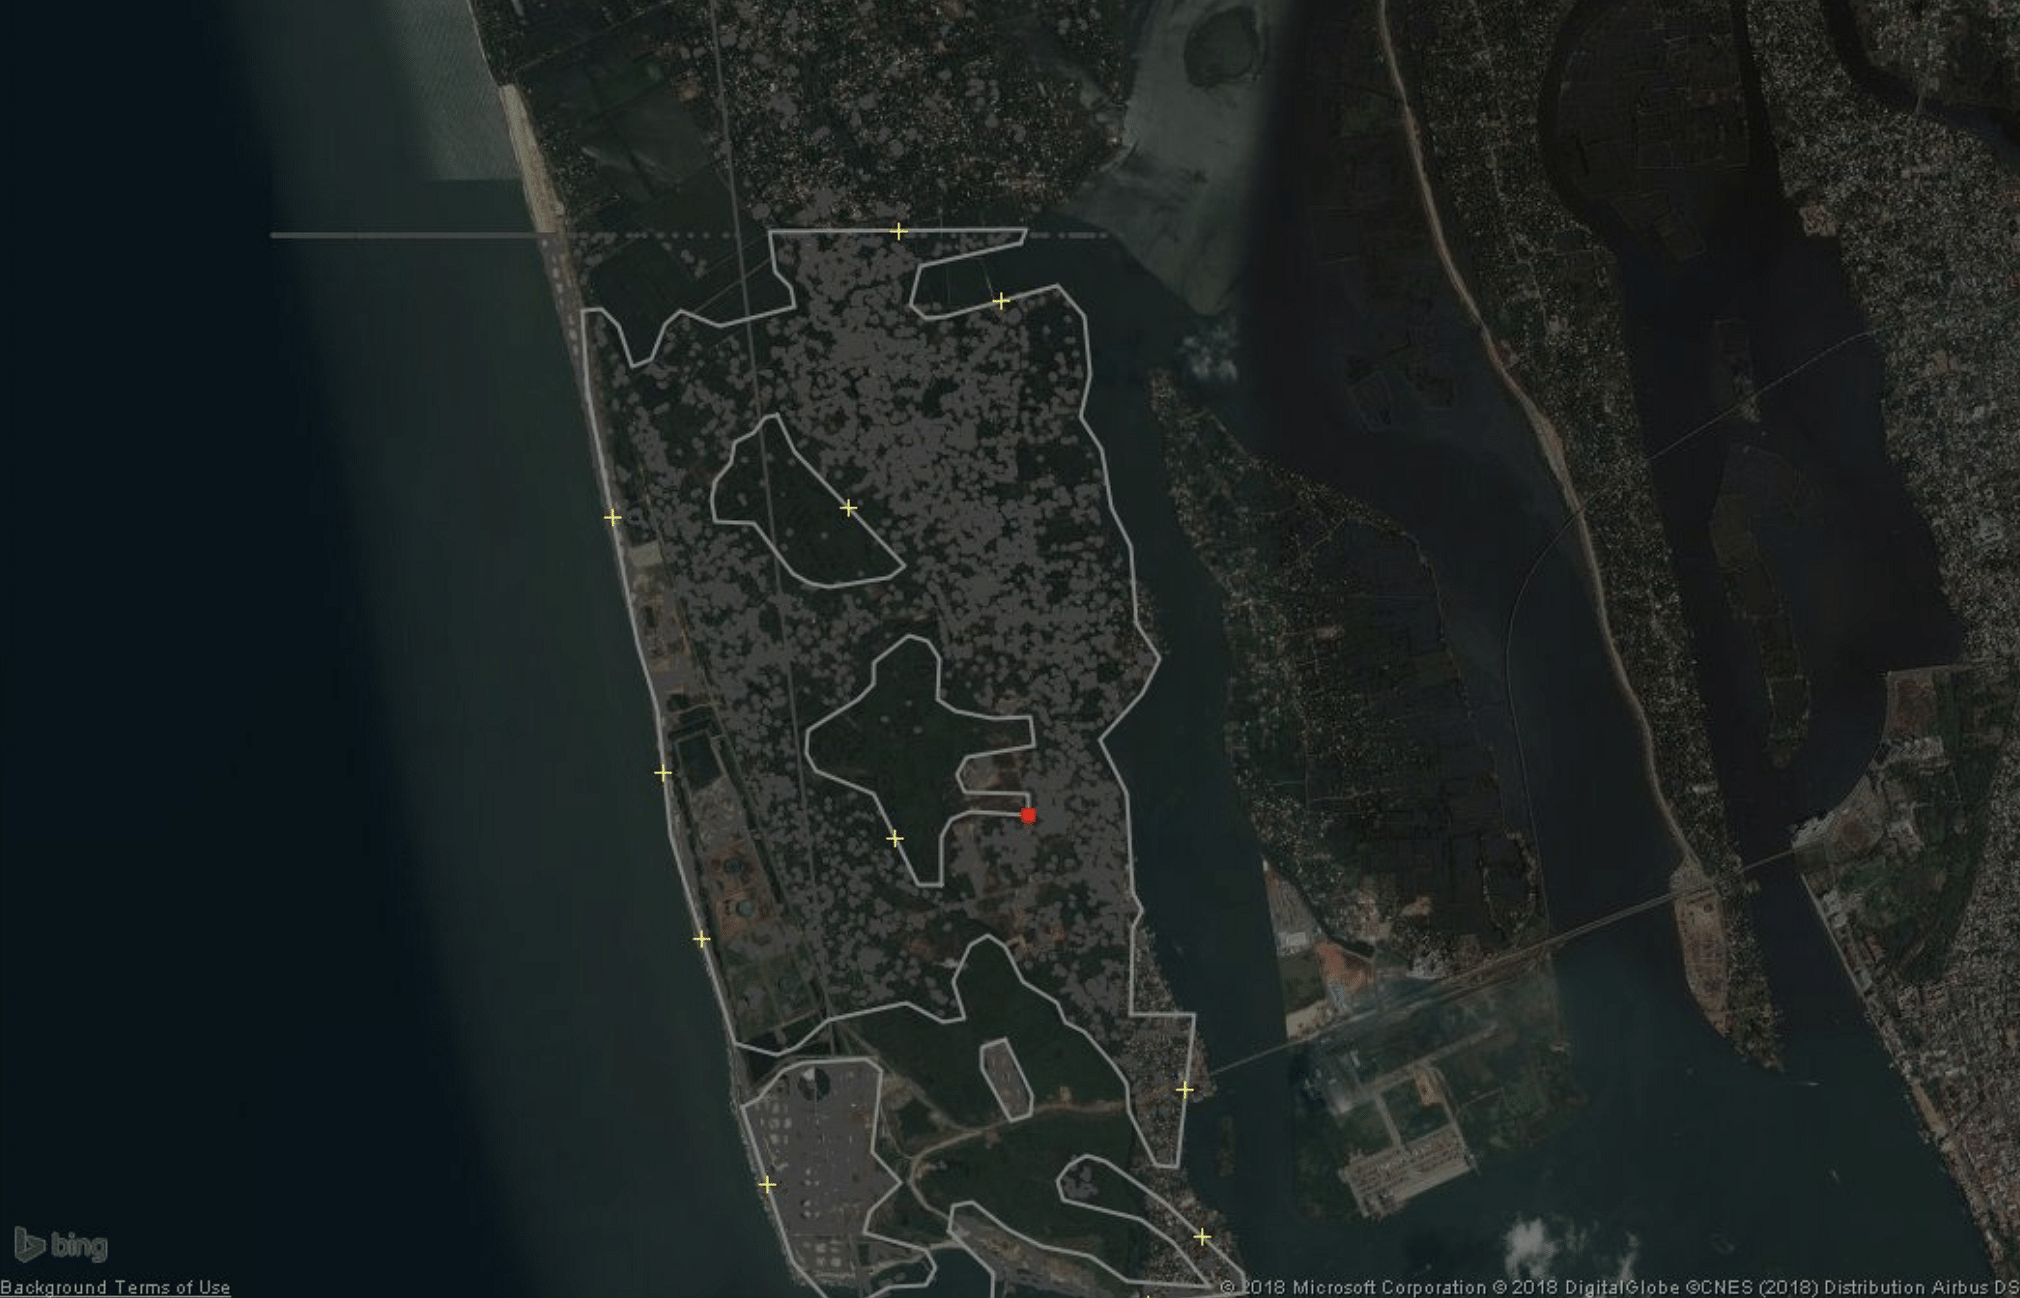 A satellite image of coastal Kerala shows the extent of floods | Twitter/BlakeGirardot